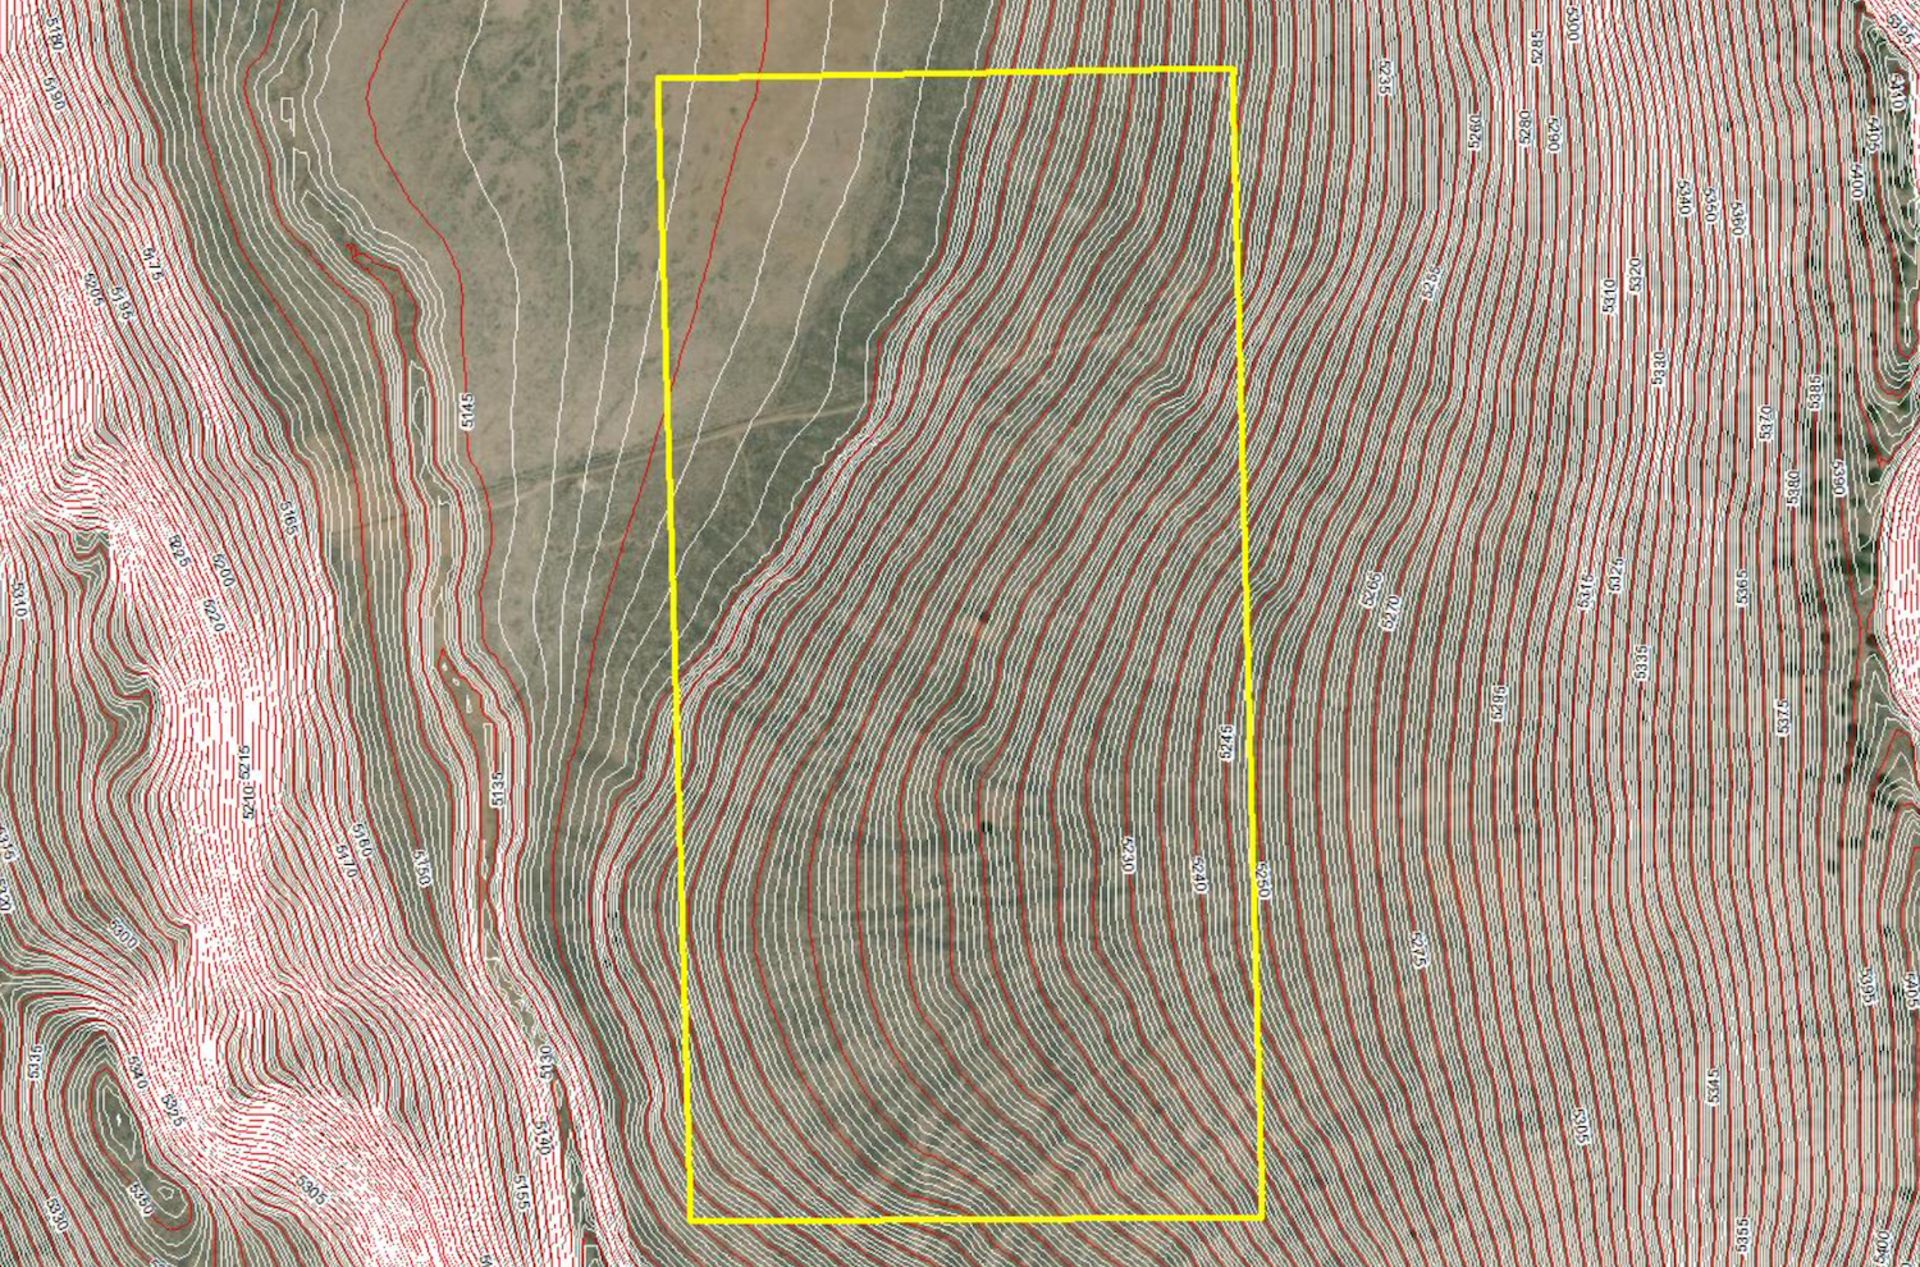 Spacious 80 Acres in Modoc County, CA Near the California-Nevada Border! - Image 12 of 17